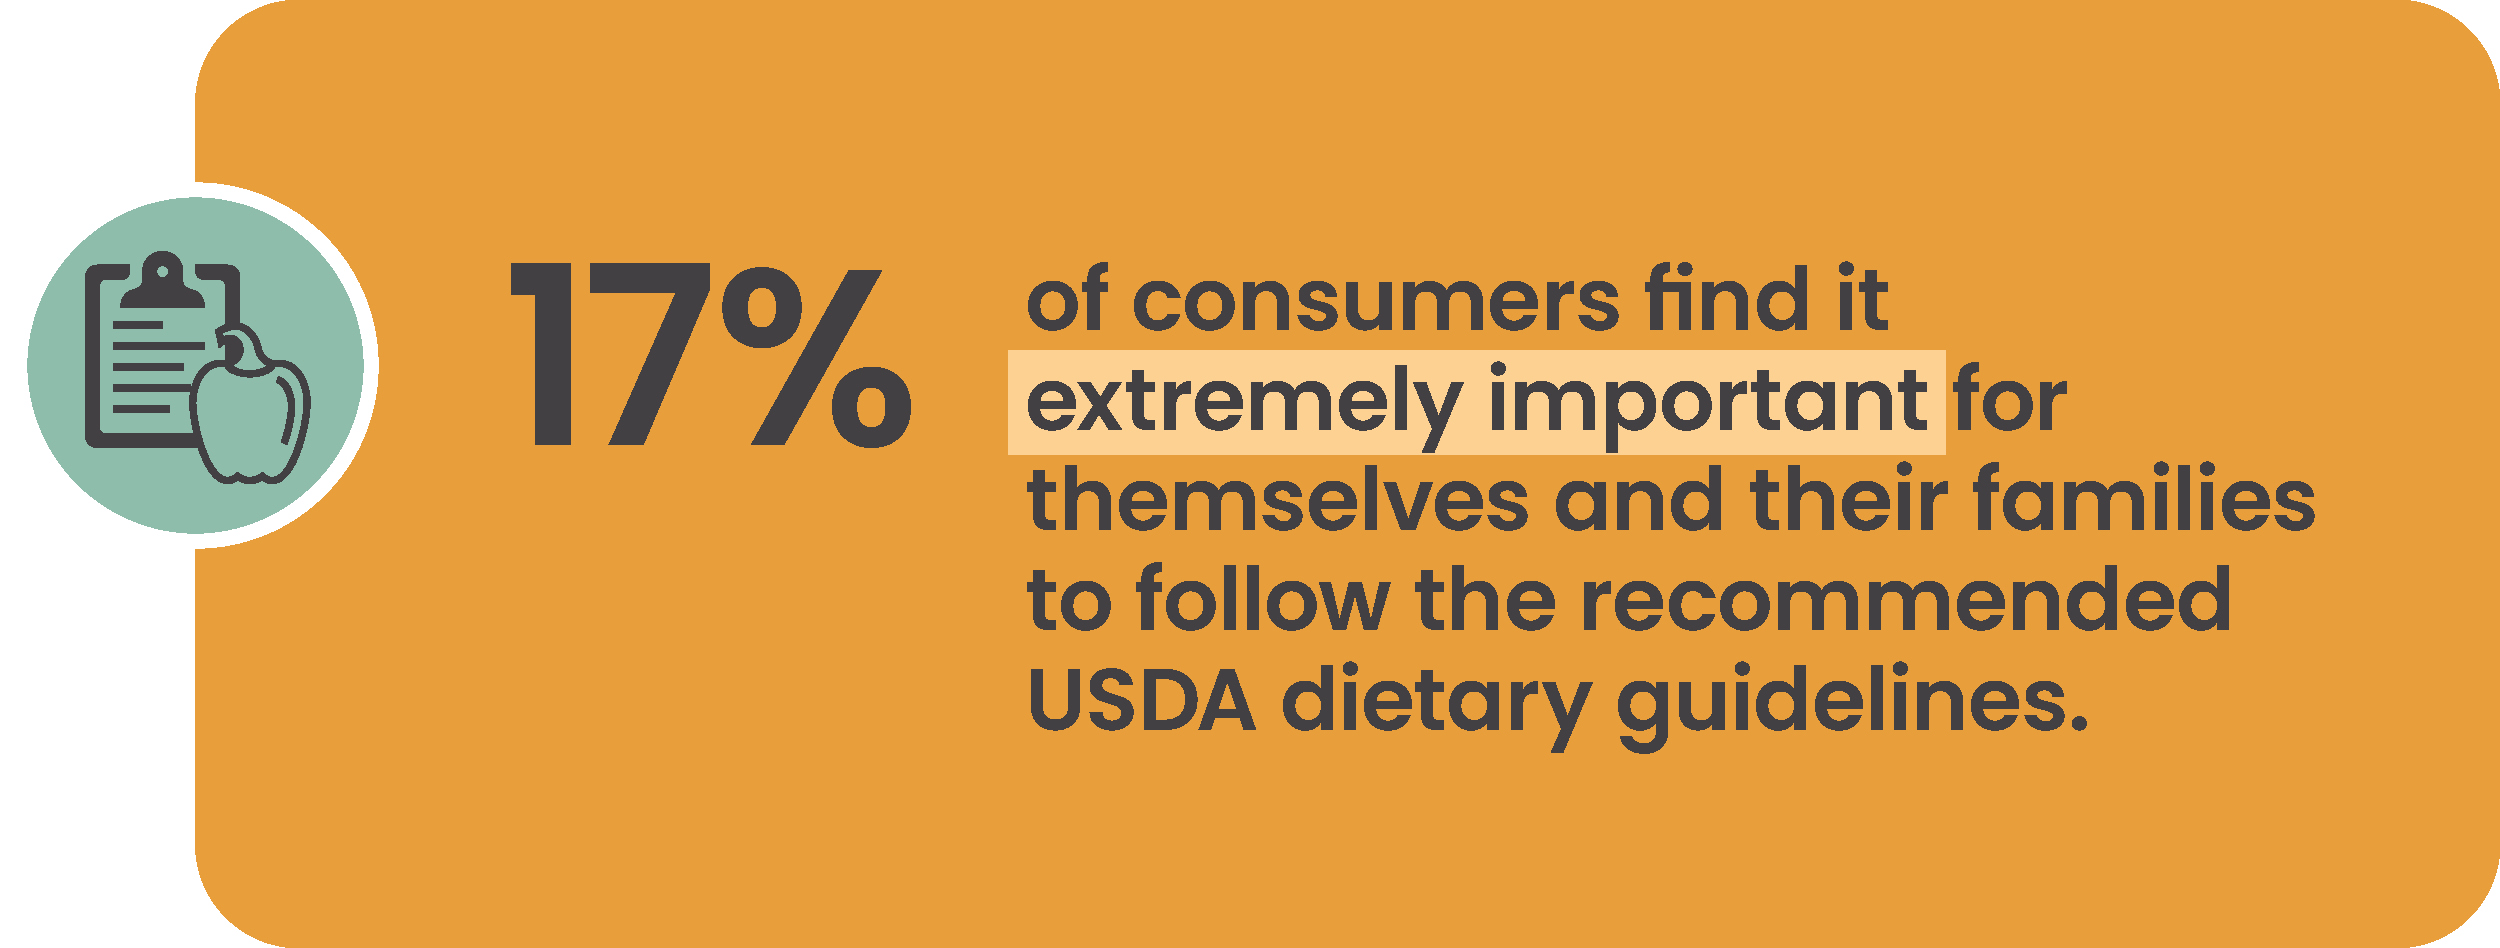 USDA dietary guidelines consumer sentiment